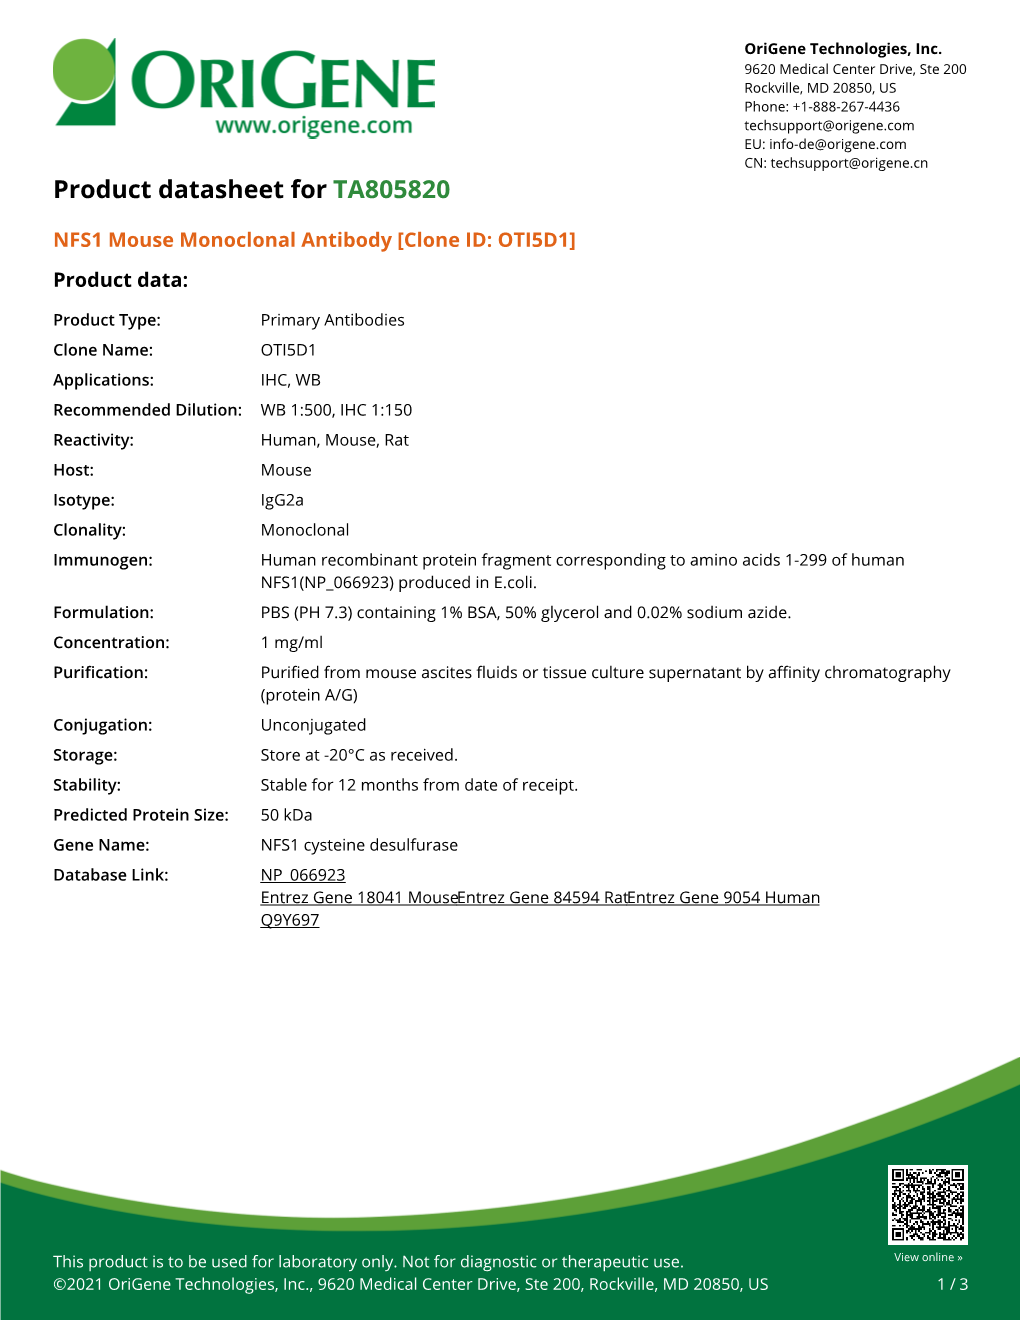 NFS1 Mouse Monoclonal Antibody [Clone ID: OTI5D1] Product Data